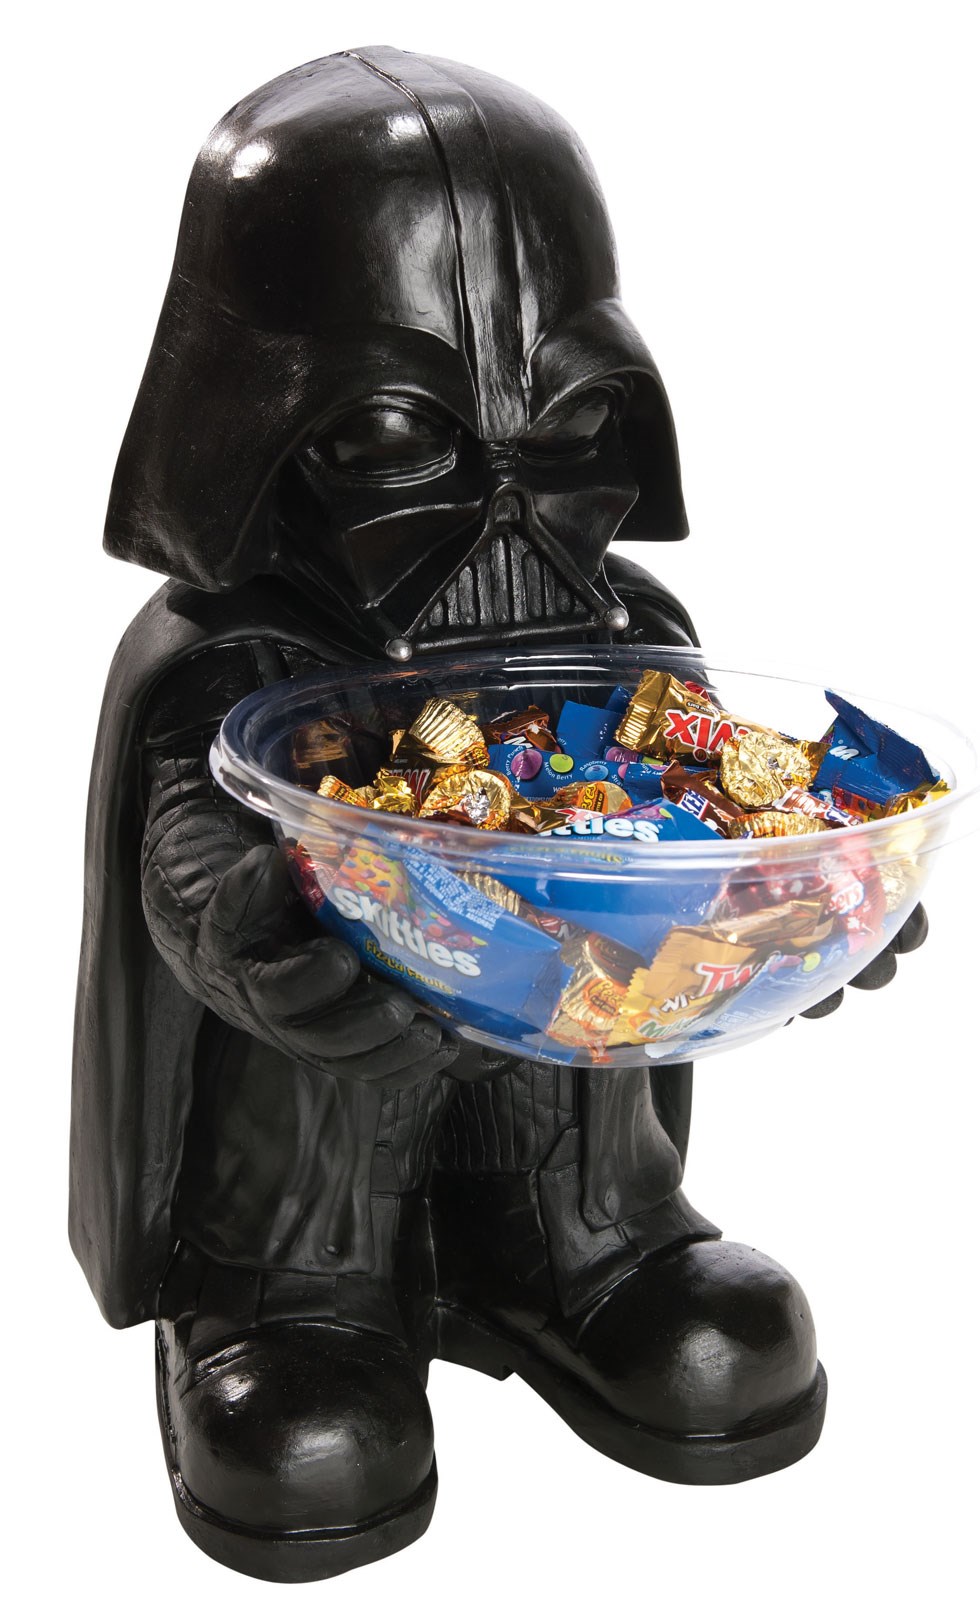 Star Wars – Darth Vader Candy Bowl and Holder